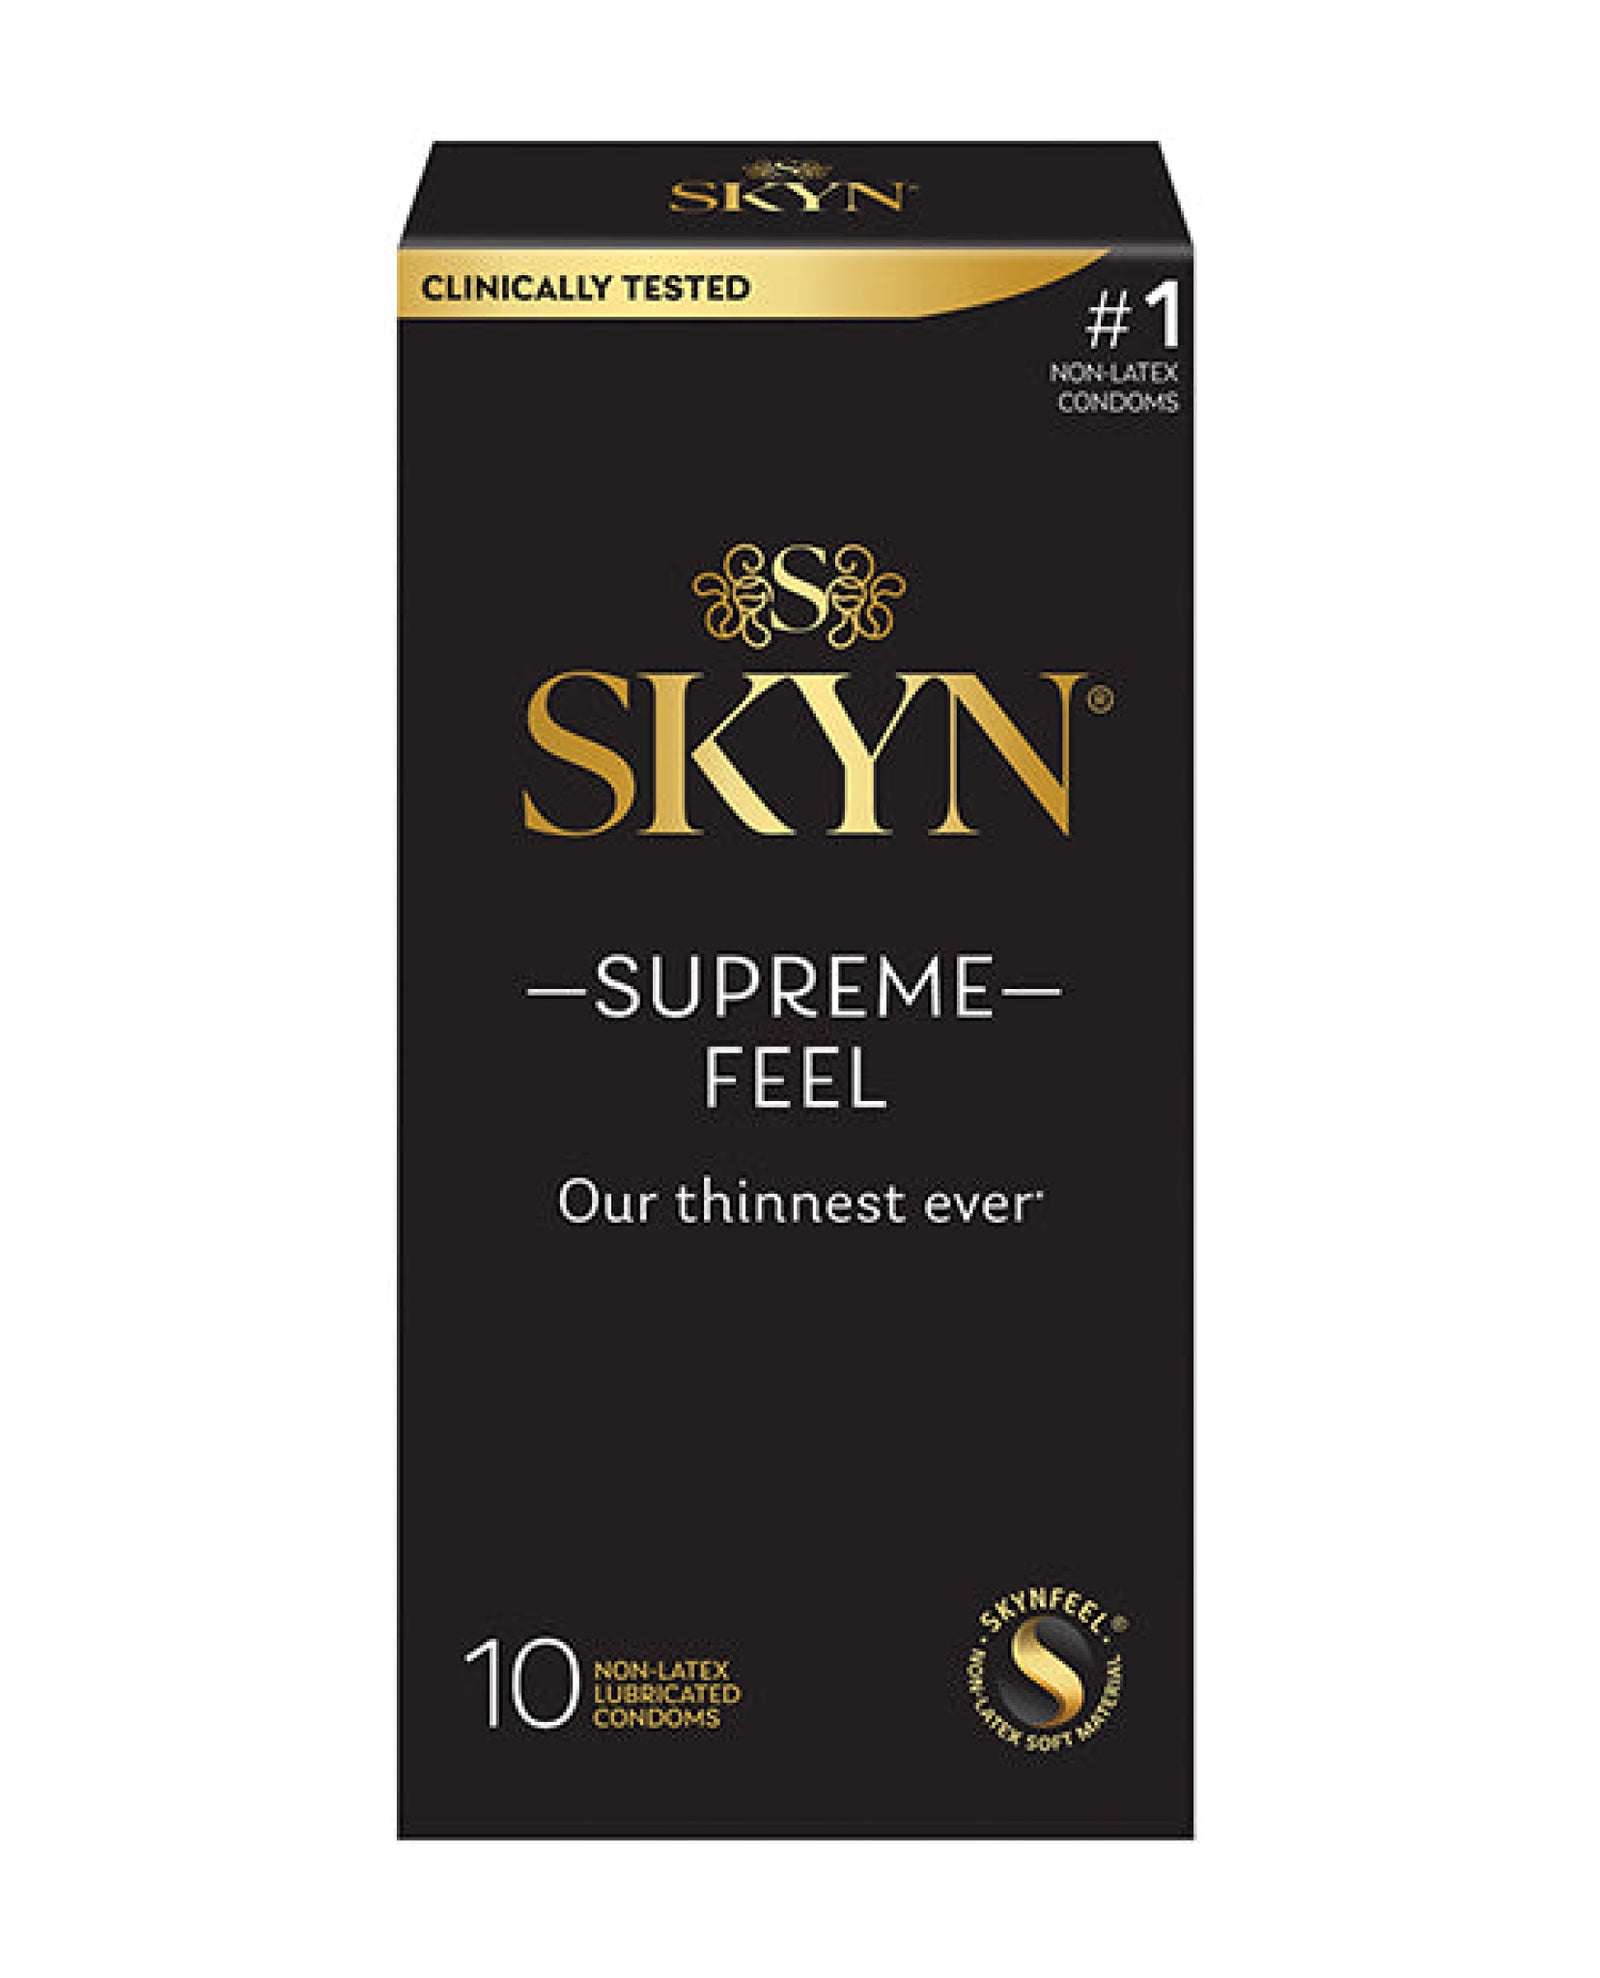 Lifestyles SKYN Supreme Feel Condoms - Pack of 10 Paradise Marketing